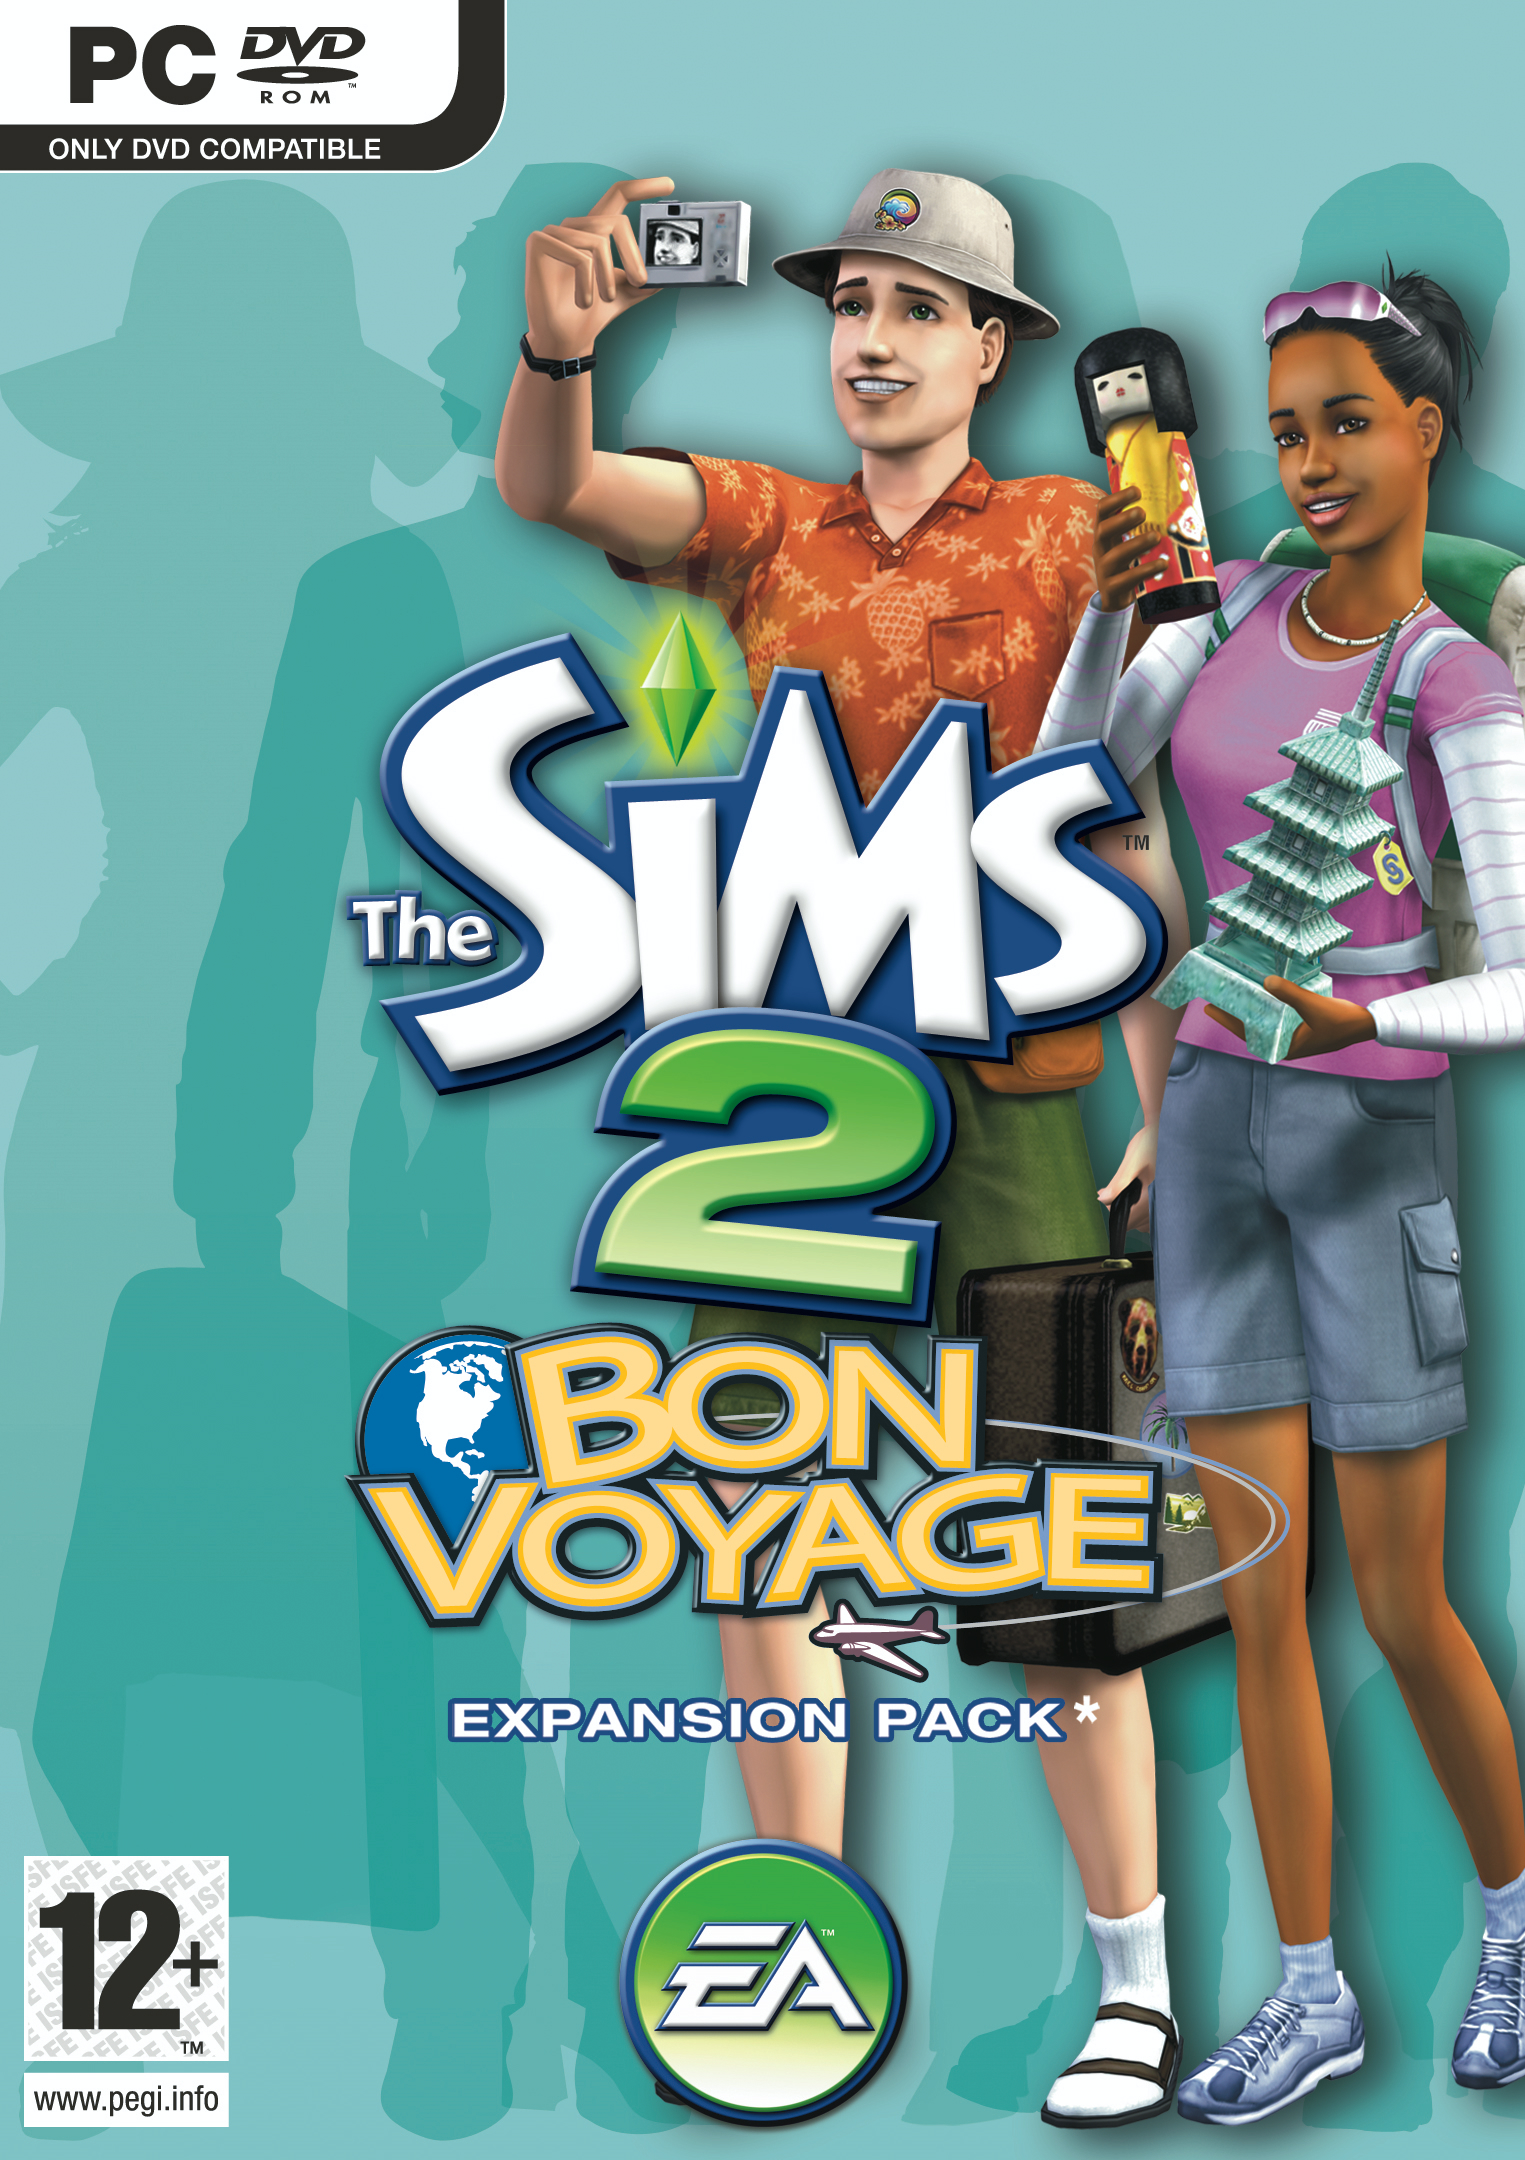 no problem sims 2 expansion packs